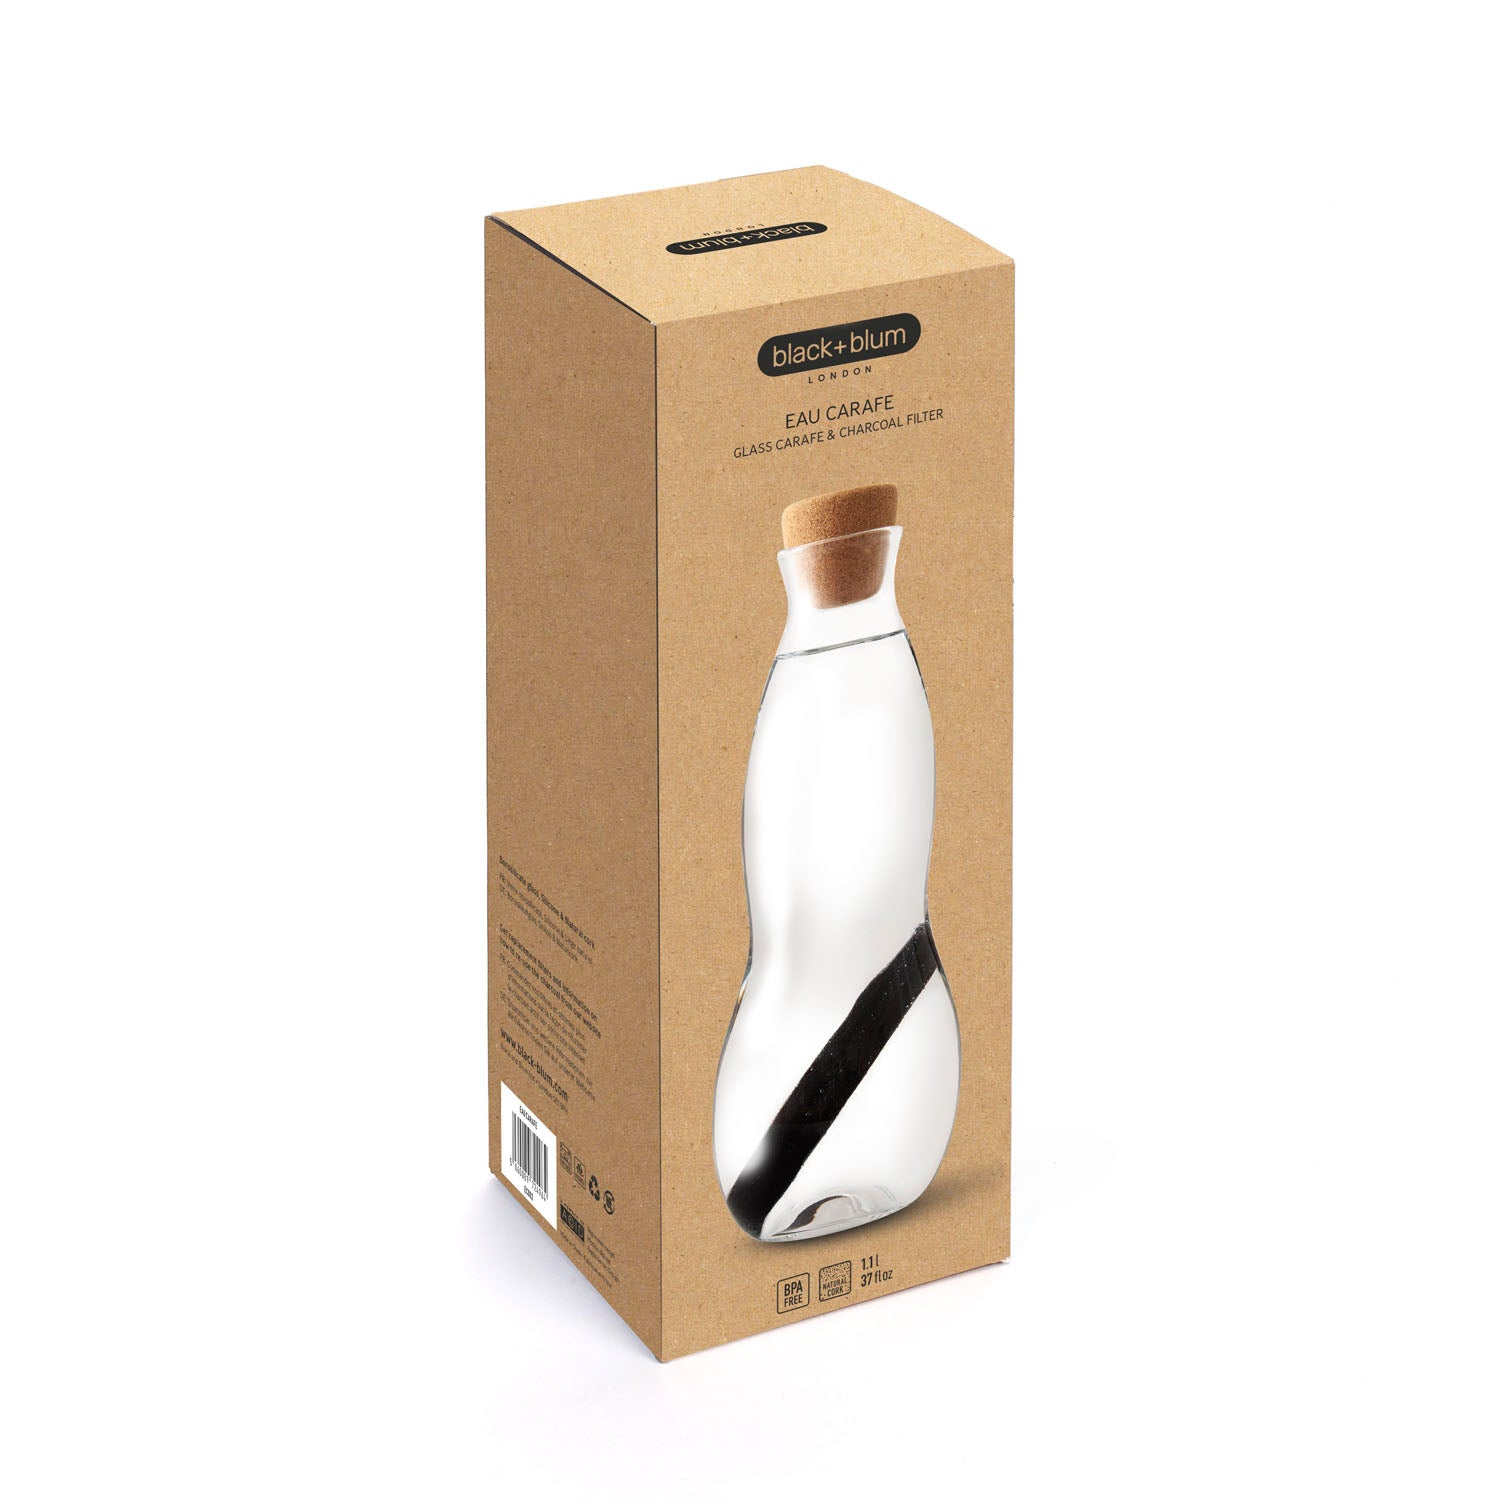 Wasserkaraffe-Eau-Carafe&Wasserfilter-Black+Blum-Design-berlindeluxe-karaffe-korken-verpackung